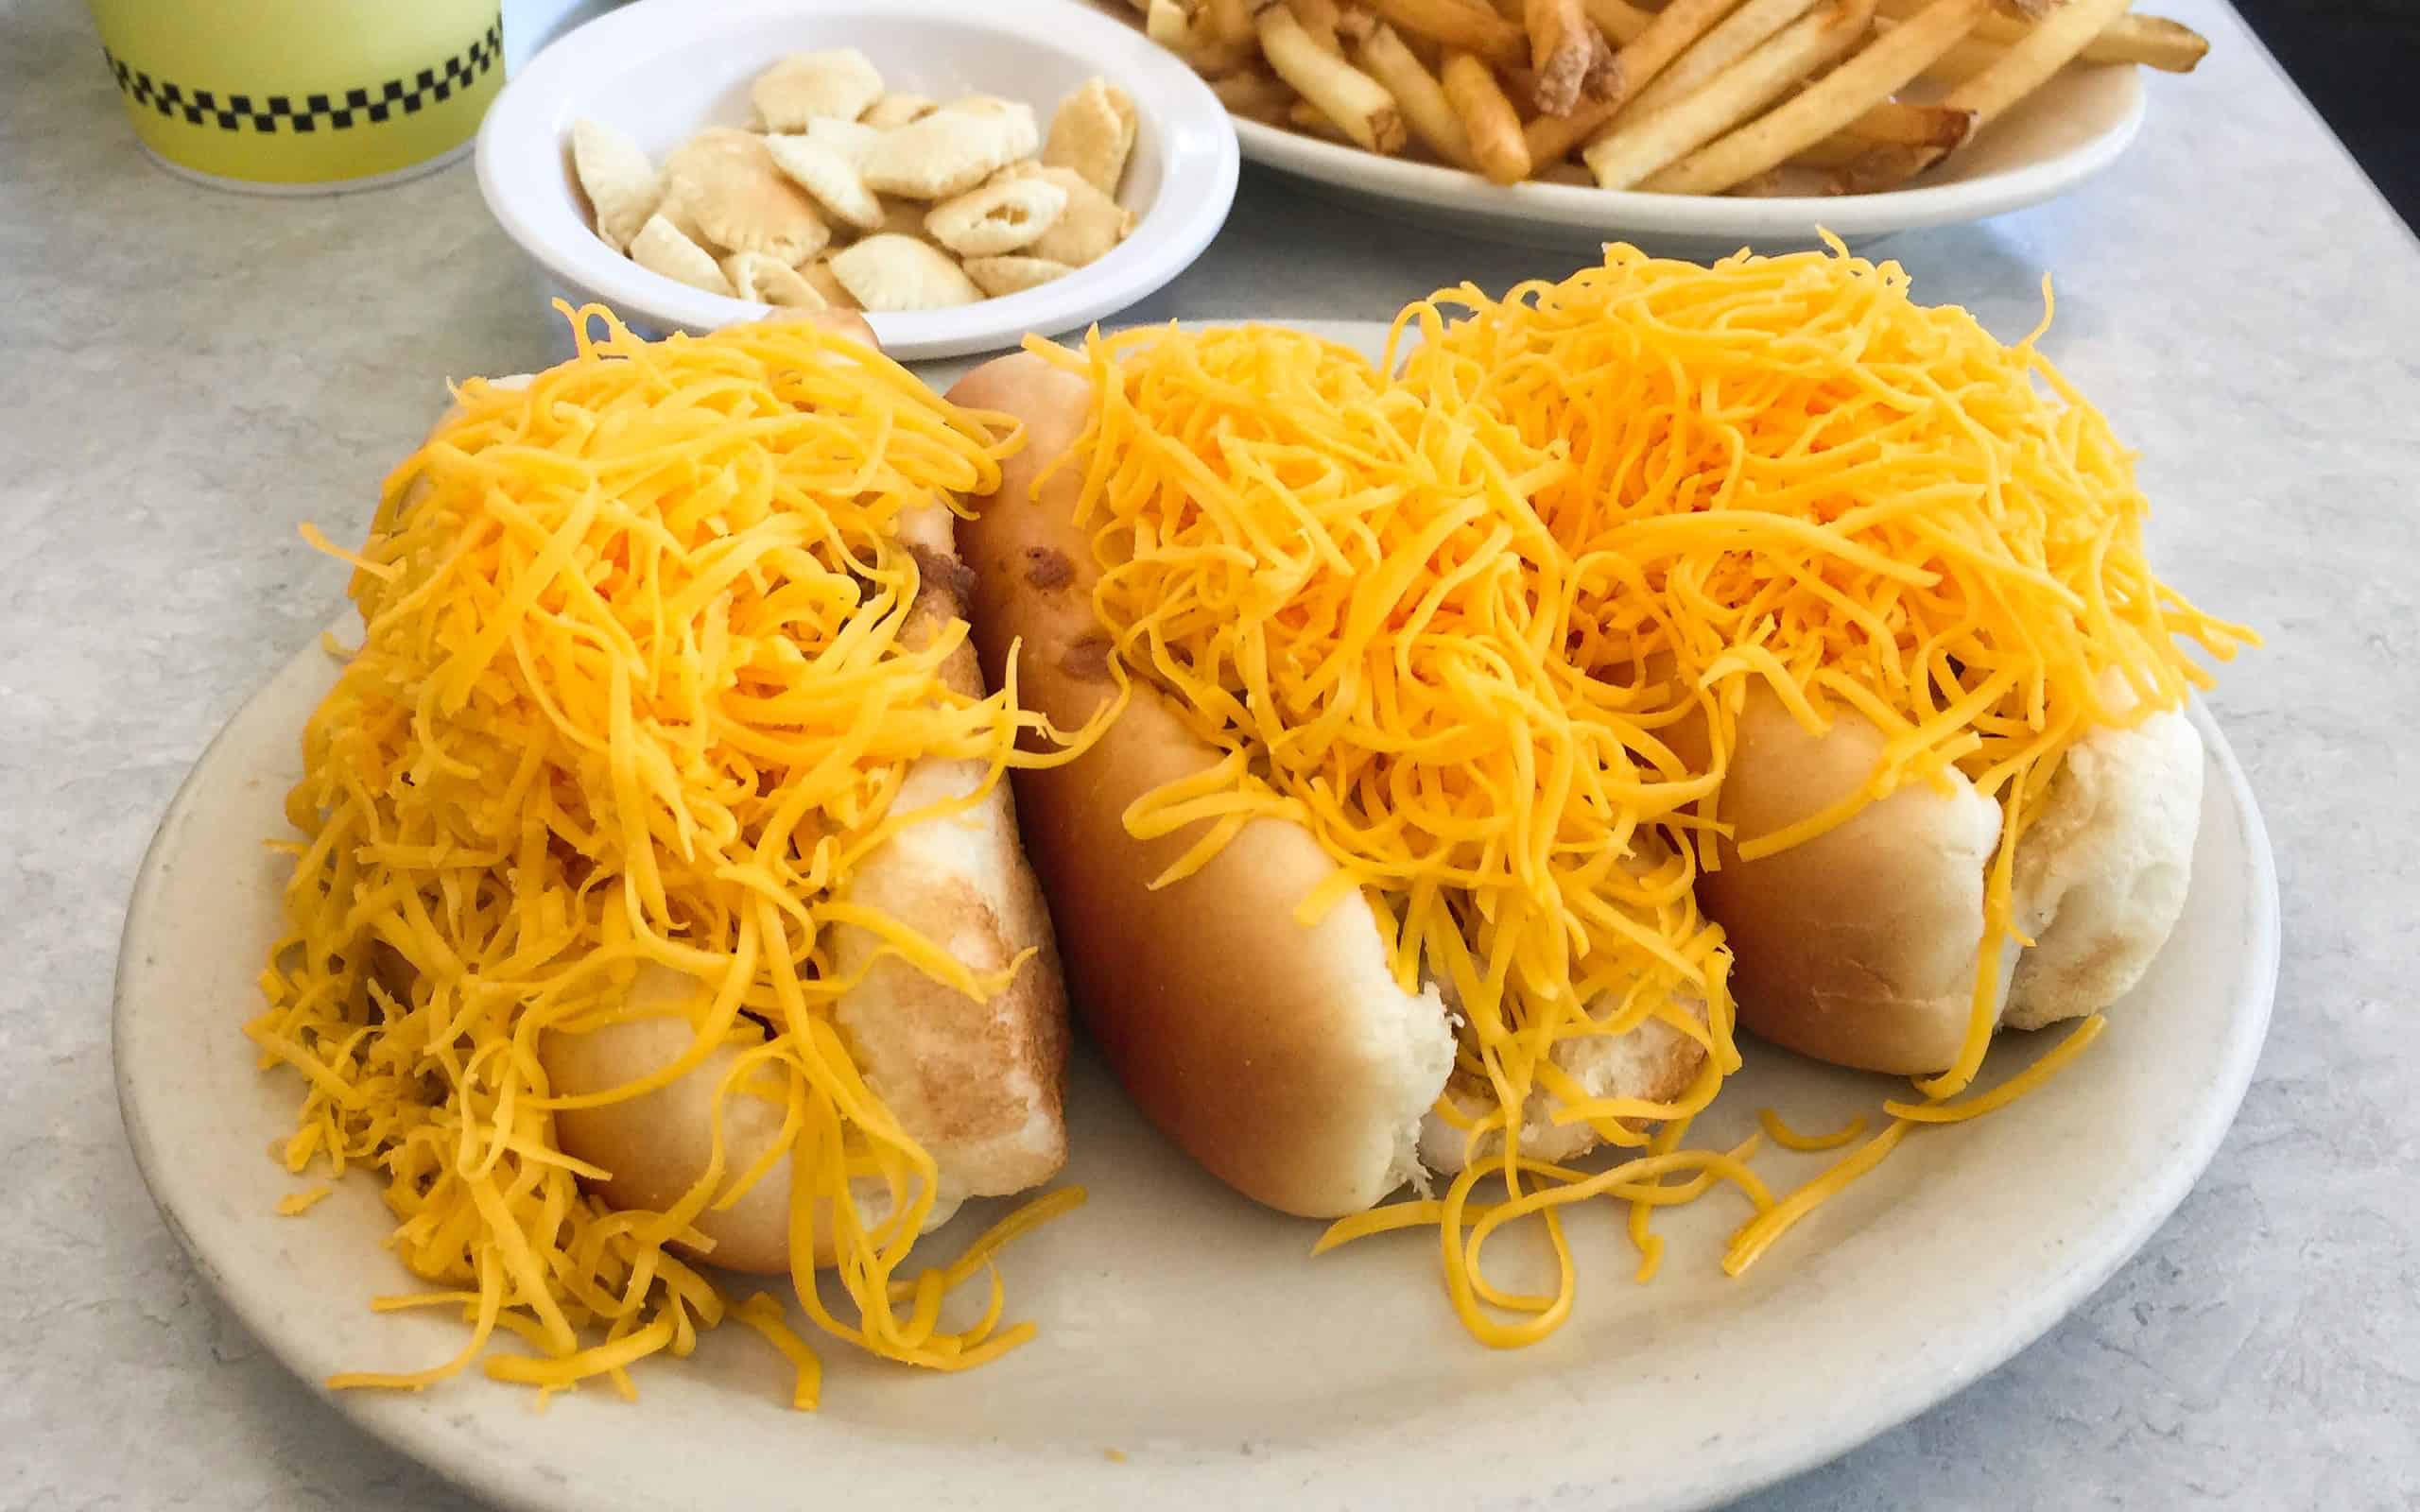 Cheese coneys in Cincinnati